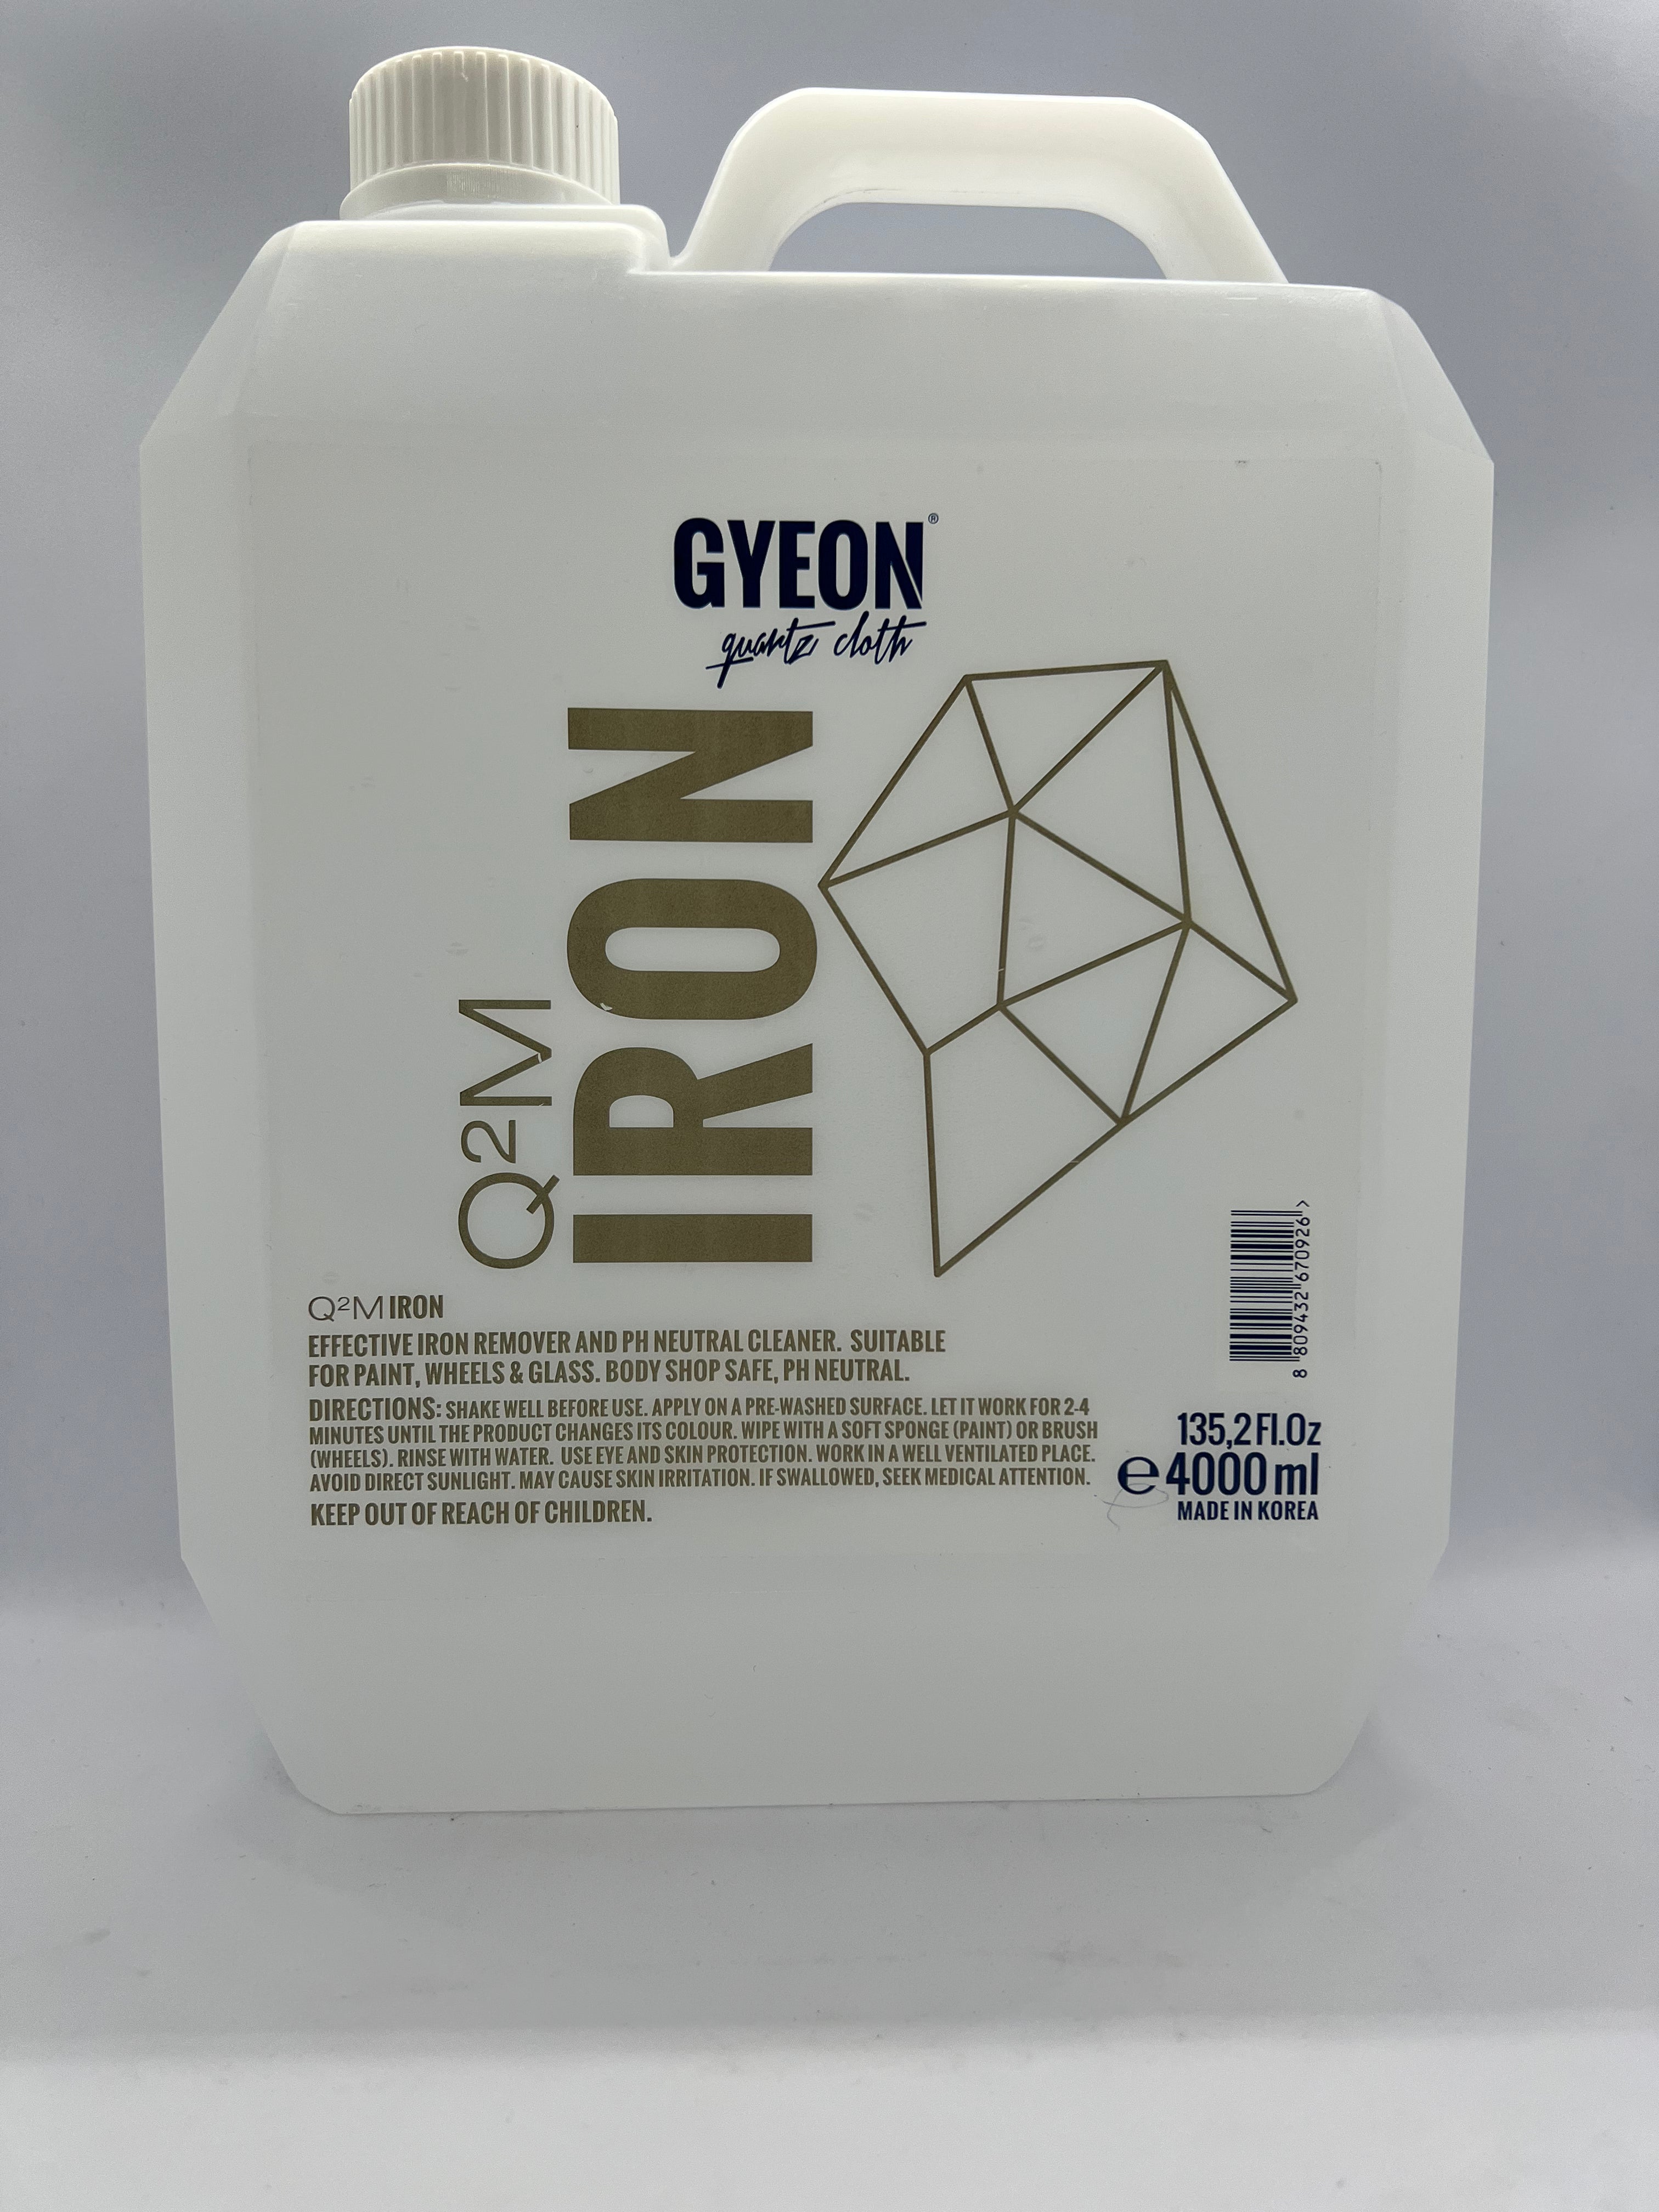 Q²M Iron - GYEON